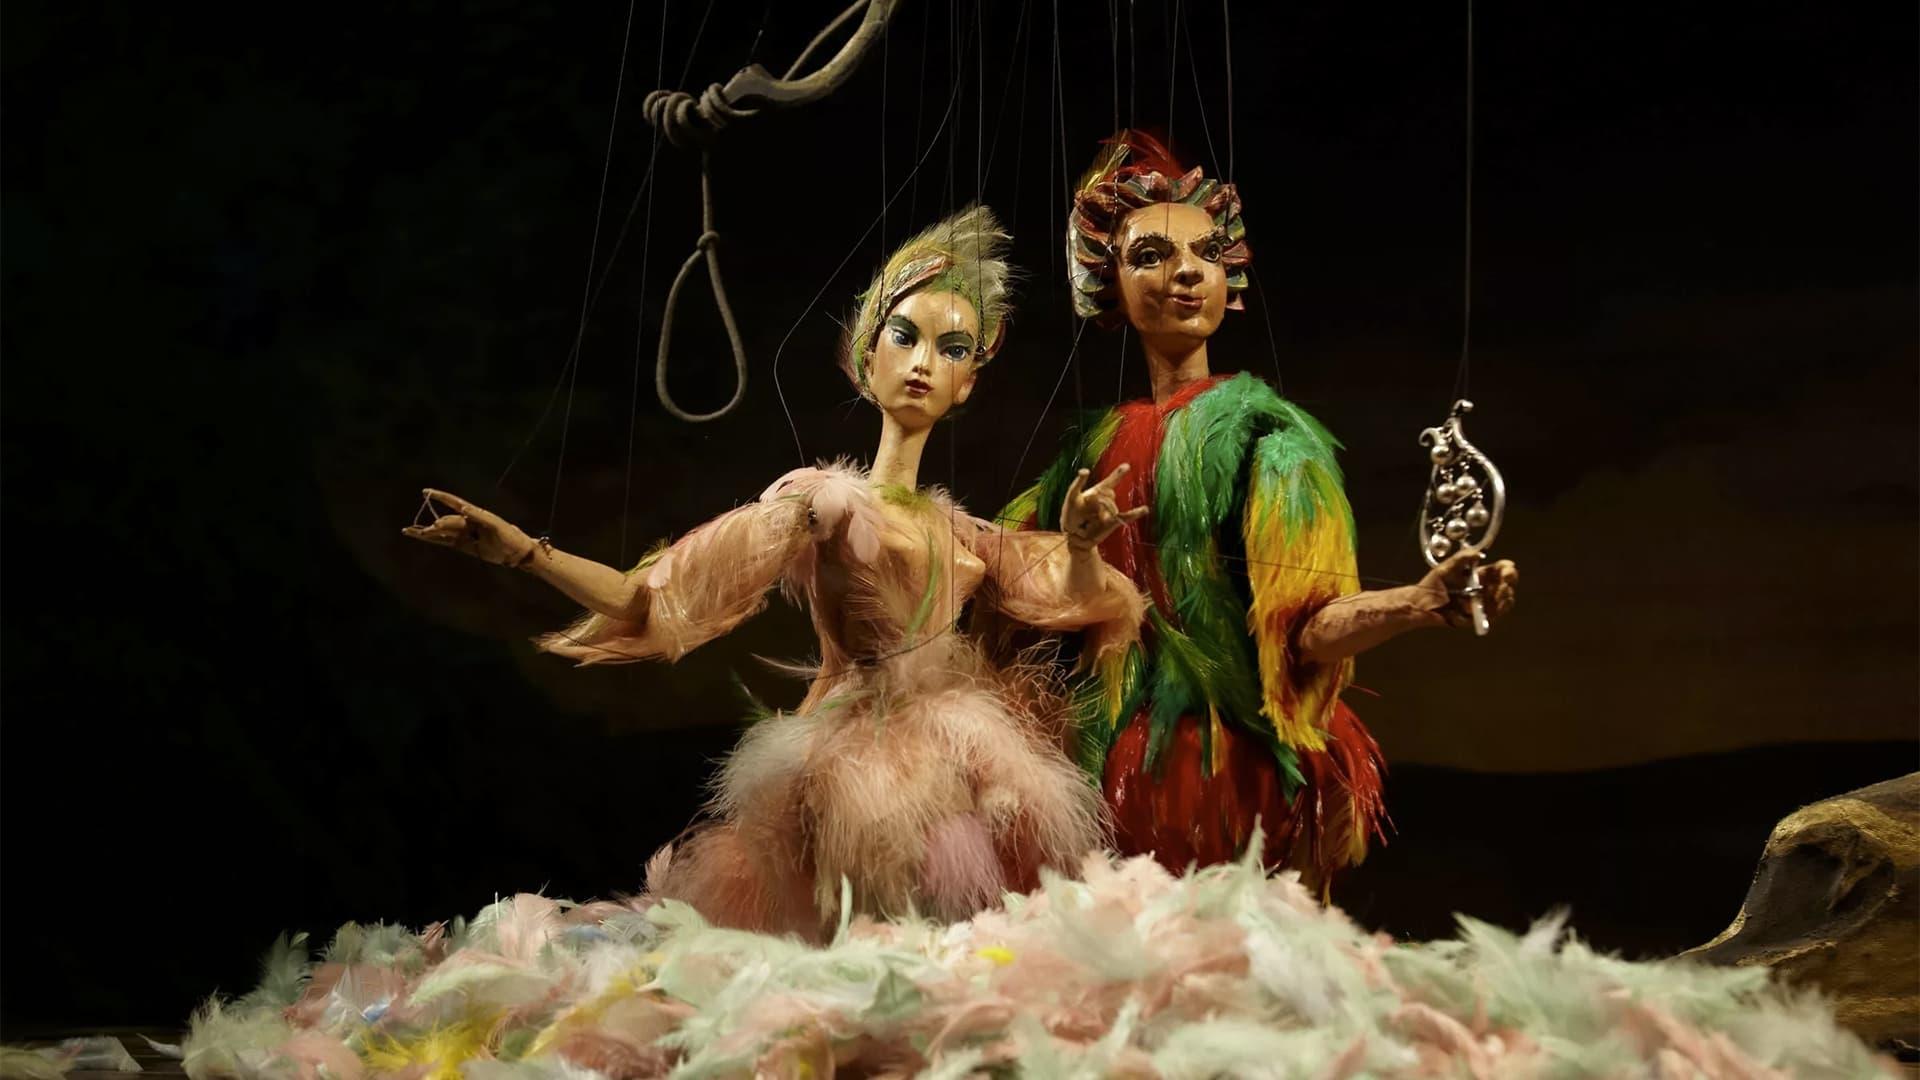 Salzburg Marionette Theatre: The Magic Flute backdrop